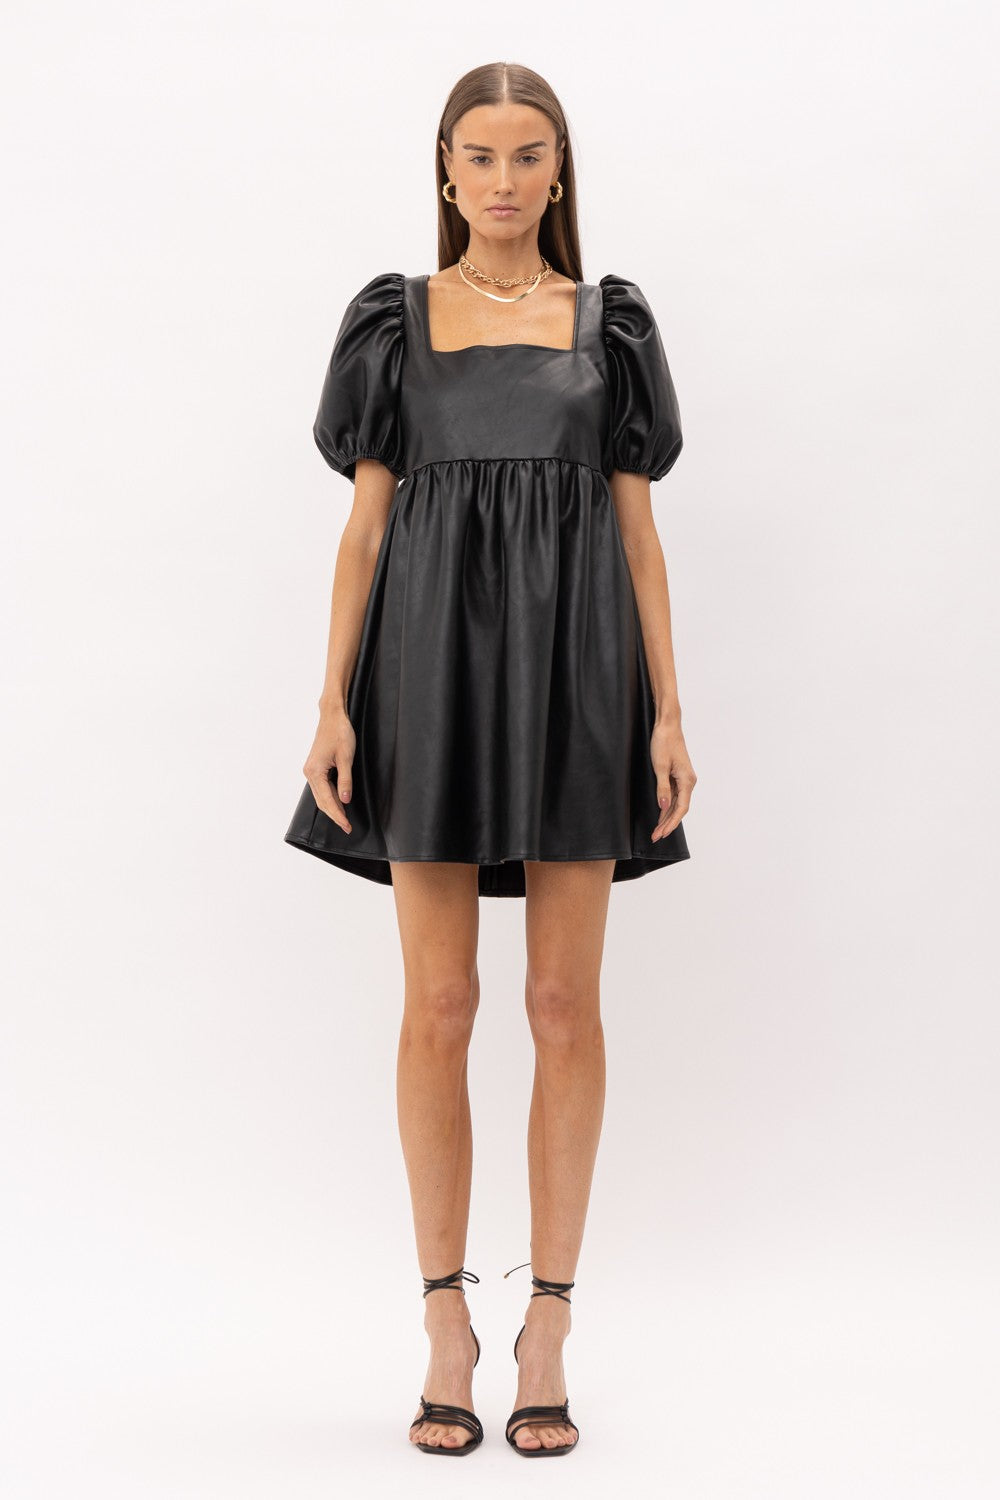 *Sofie the Label Teen's Area Black Mini Dress